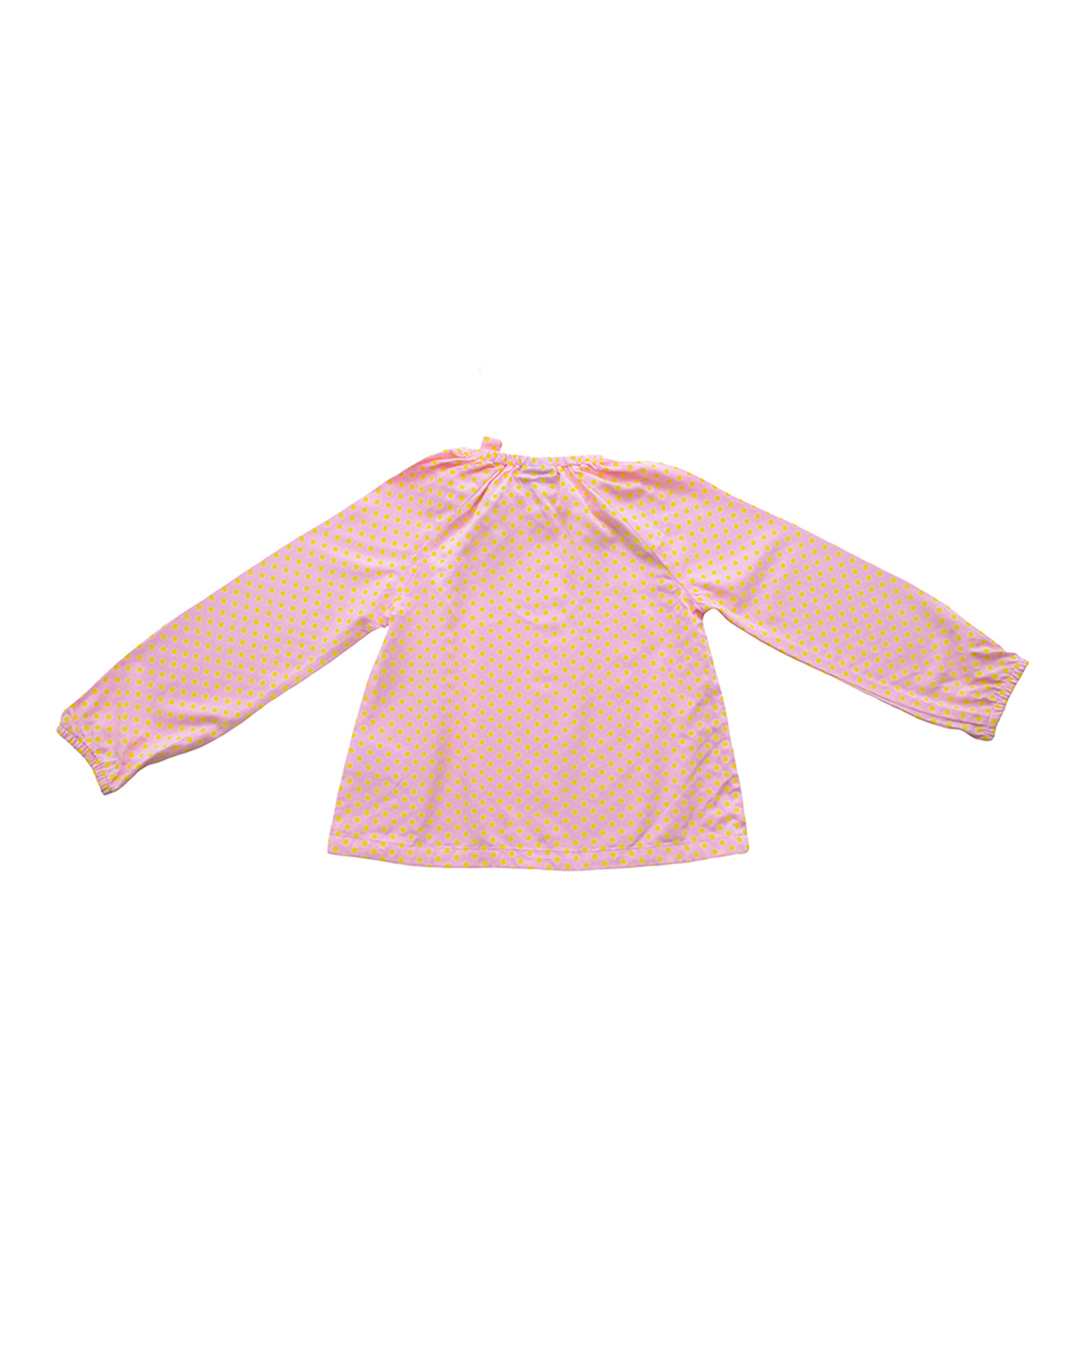 Blusa manga larga rosada con puntos amarillos